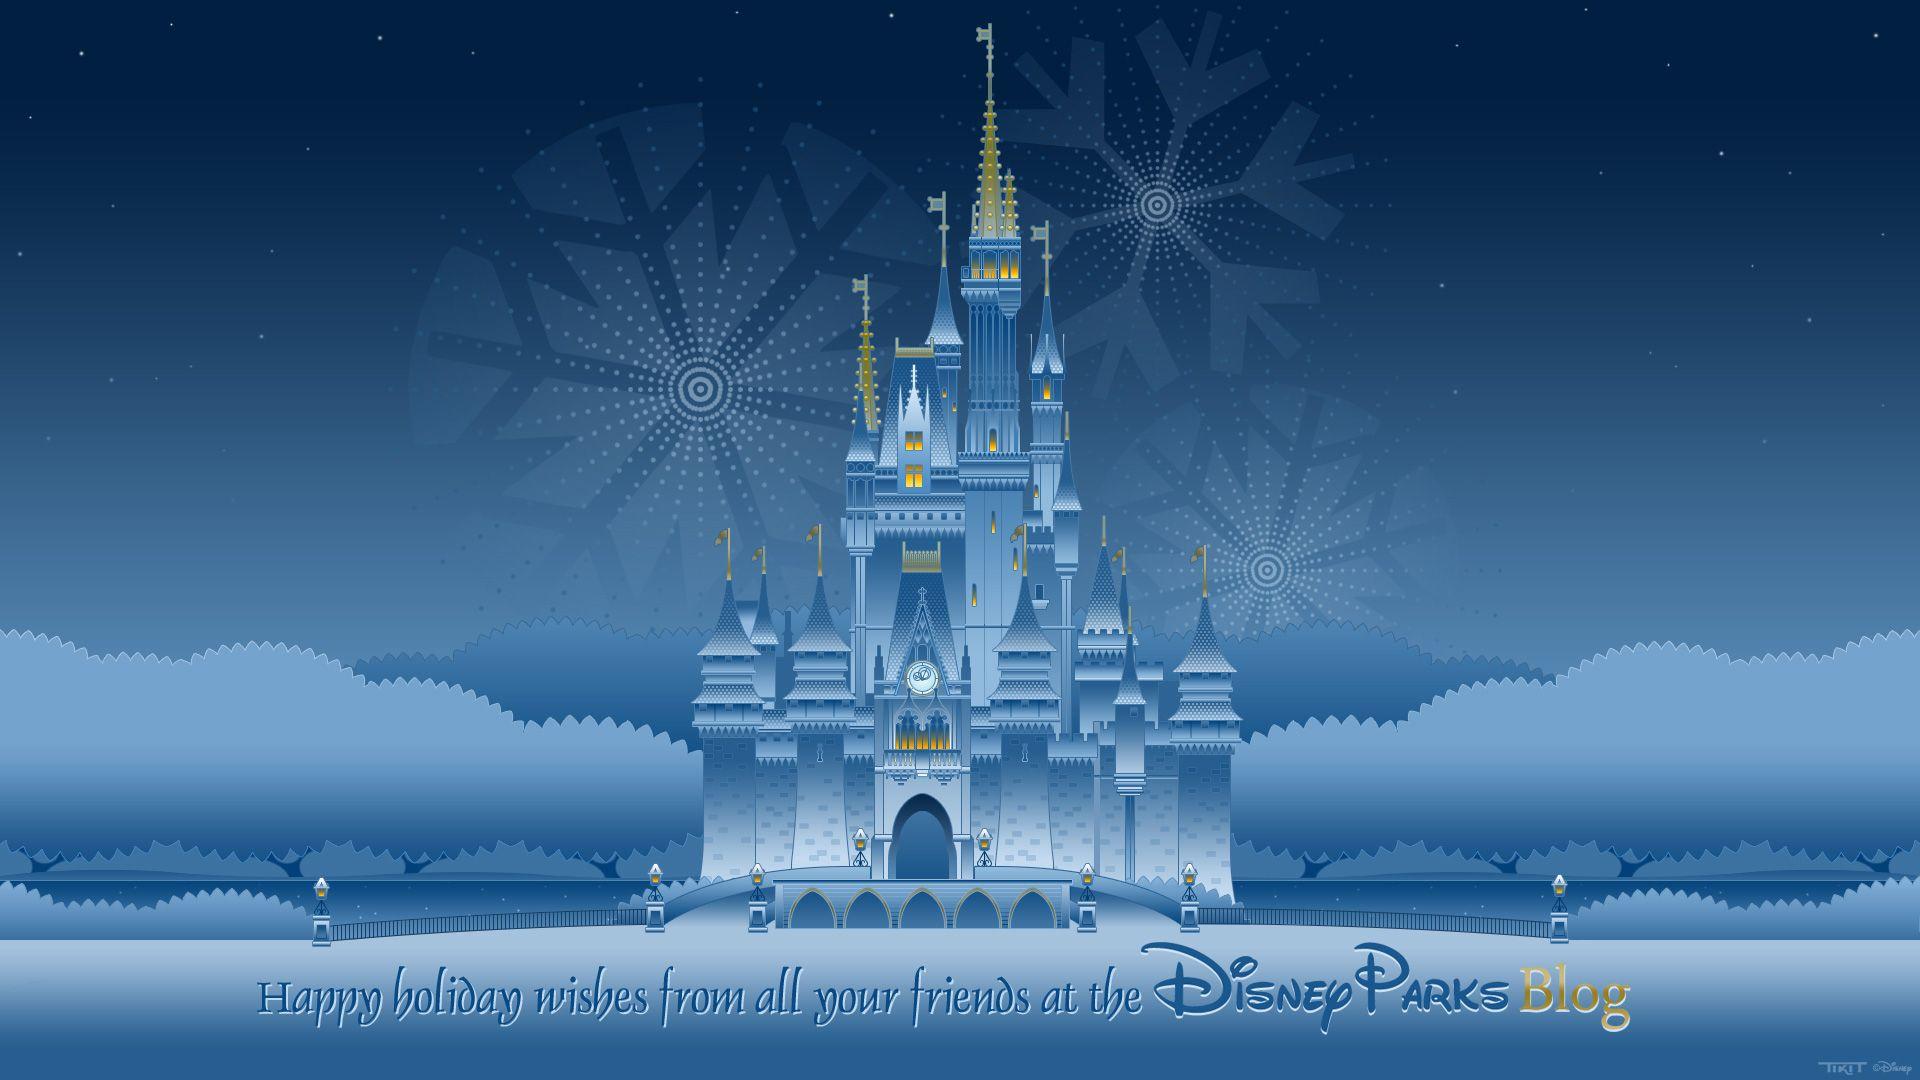 Celebrate The Holidays With 15 Disney Parks Blog Wallpaper. Disney Parks Blog